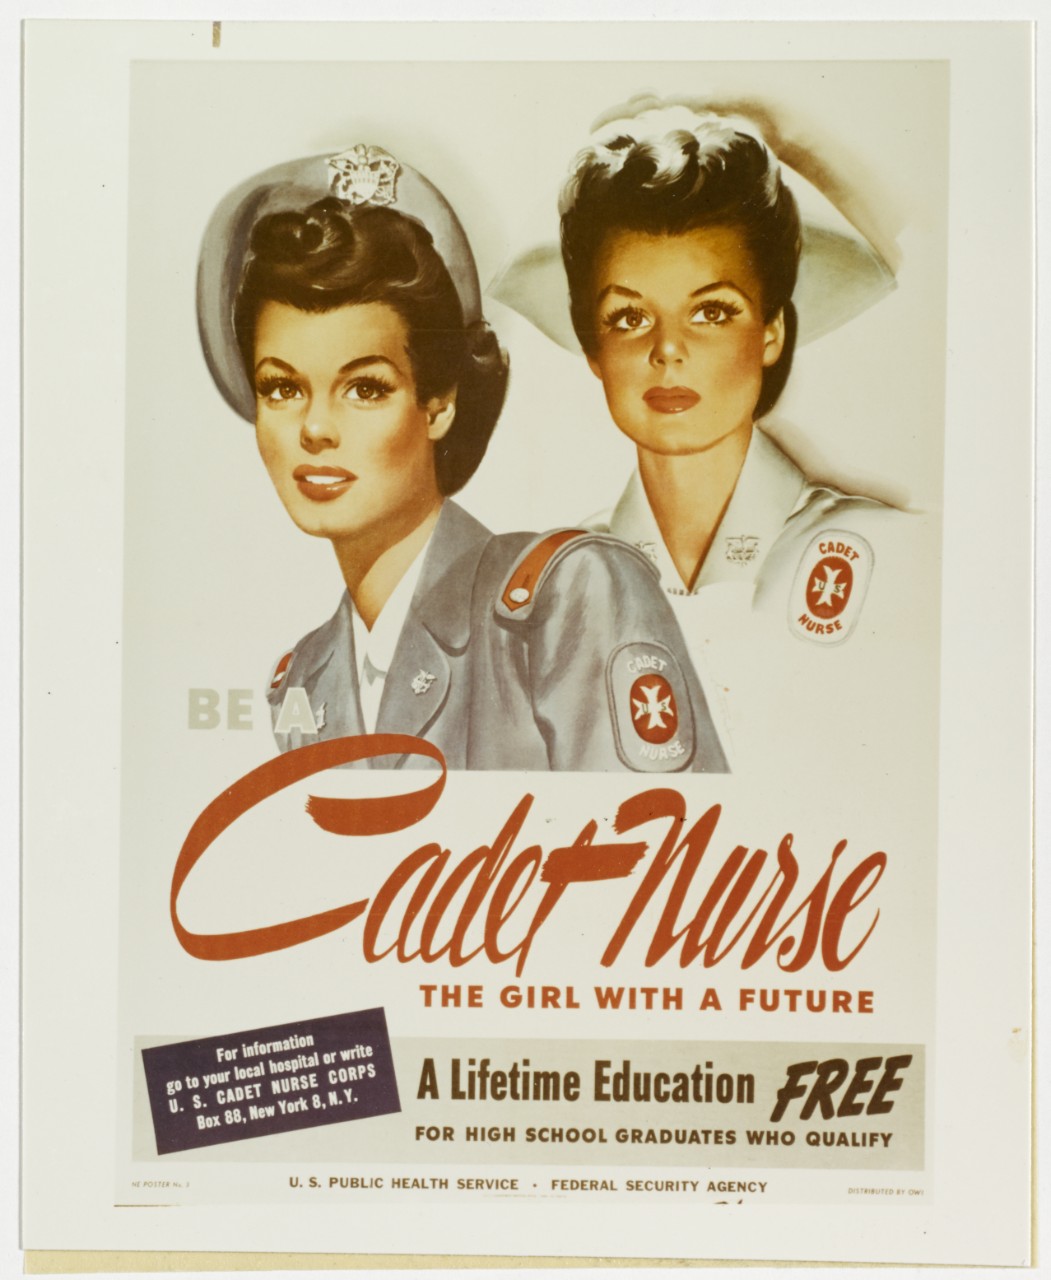 Cadet Nurse recruiting poster